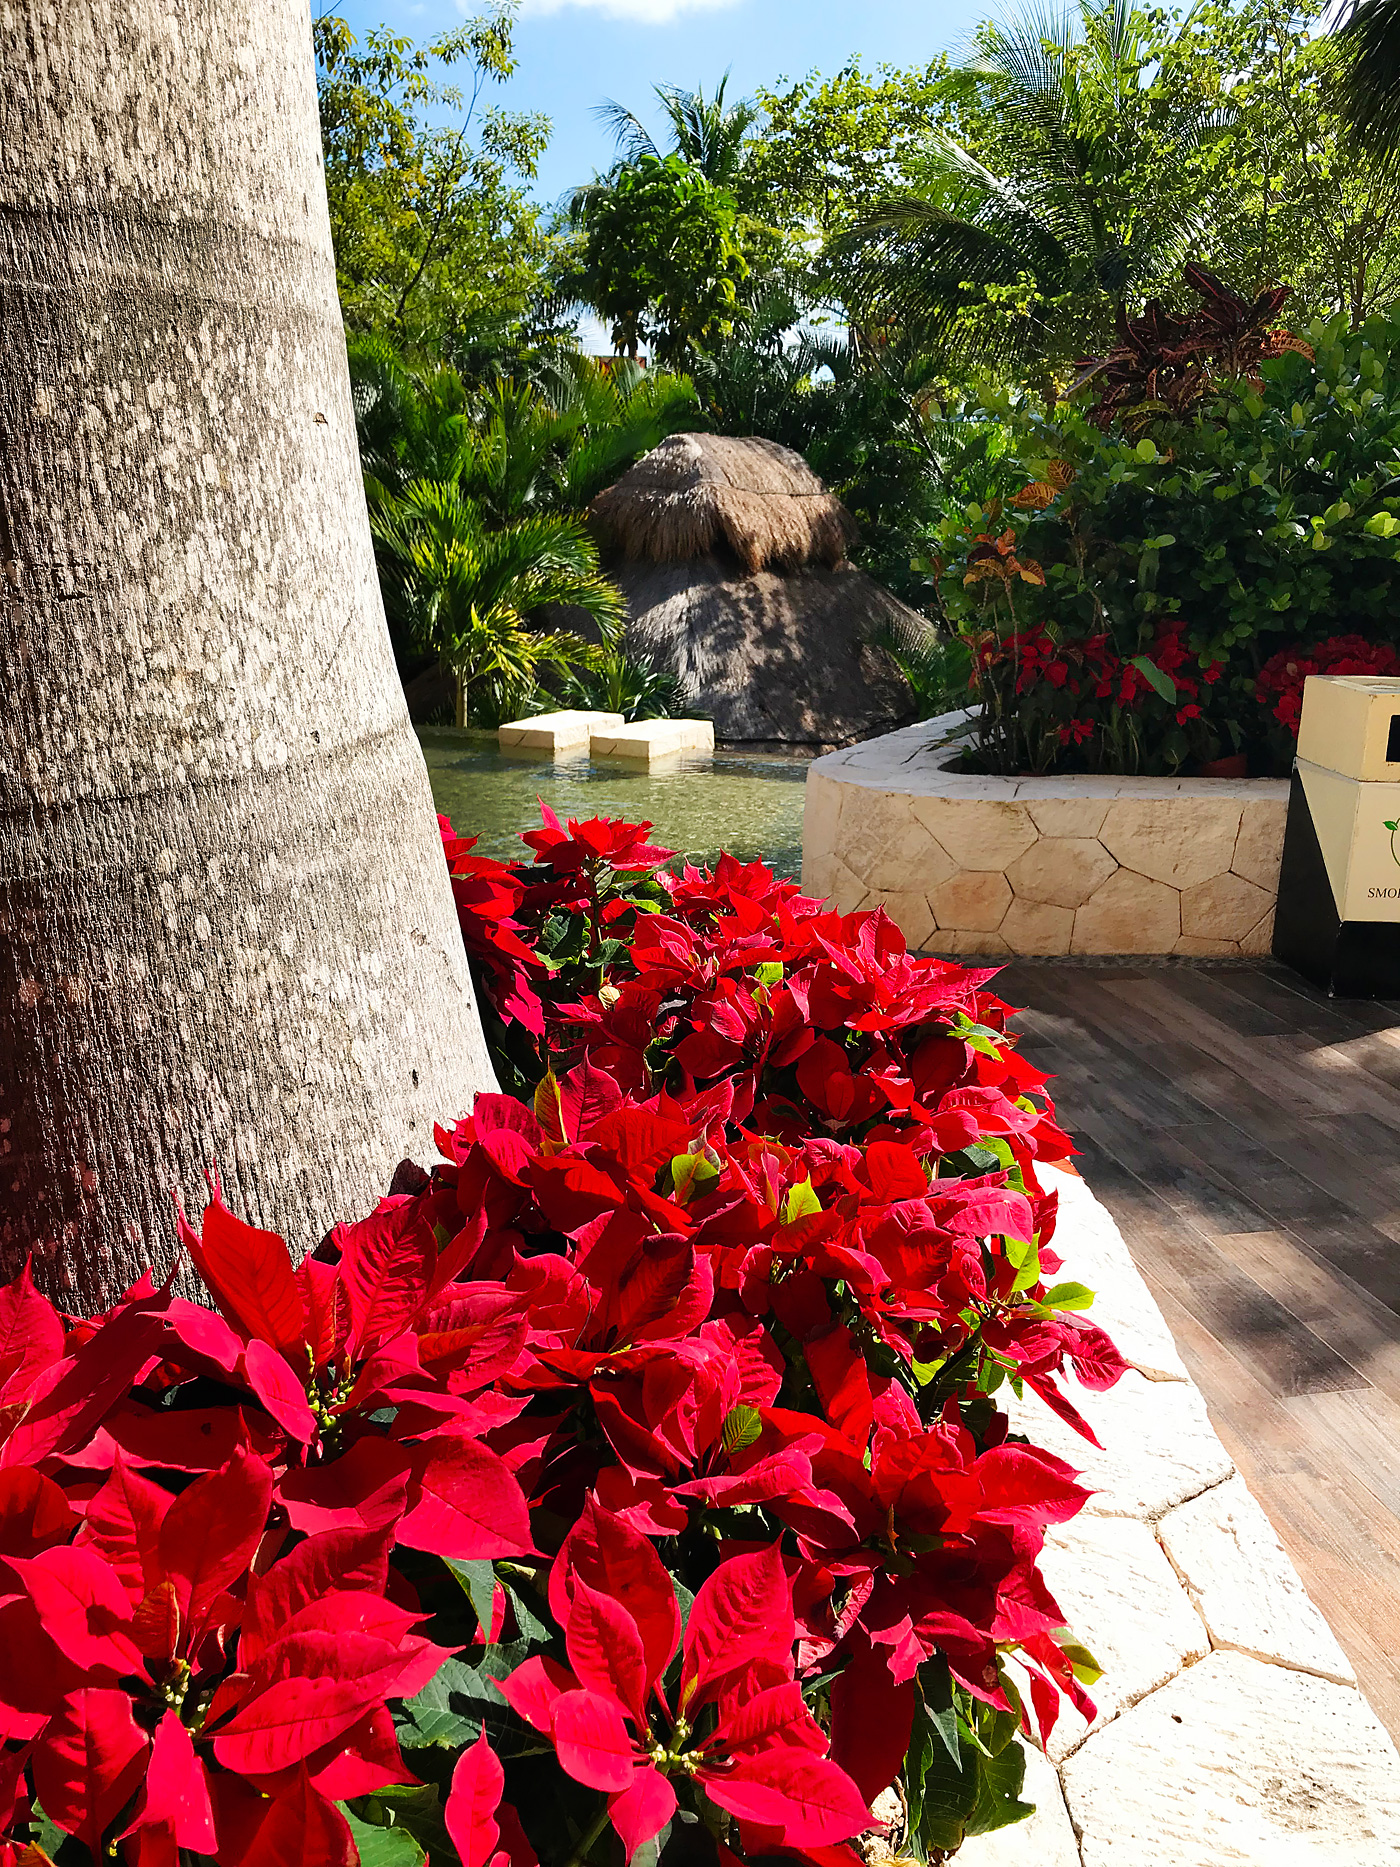 Villa Del Palmar - Cancun Luxury Travel - Resort Review